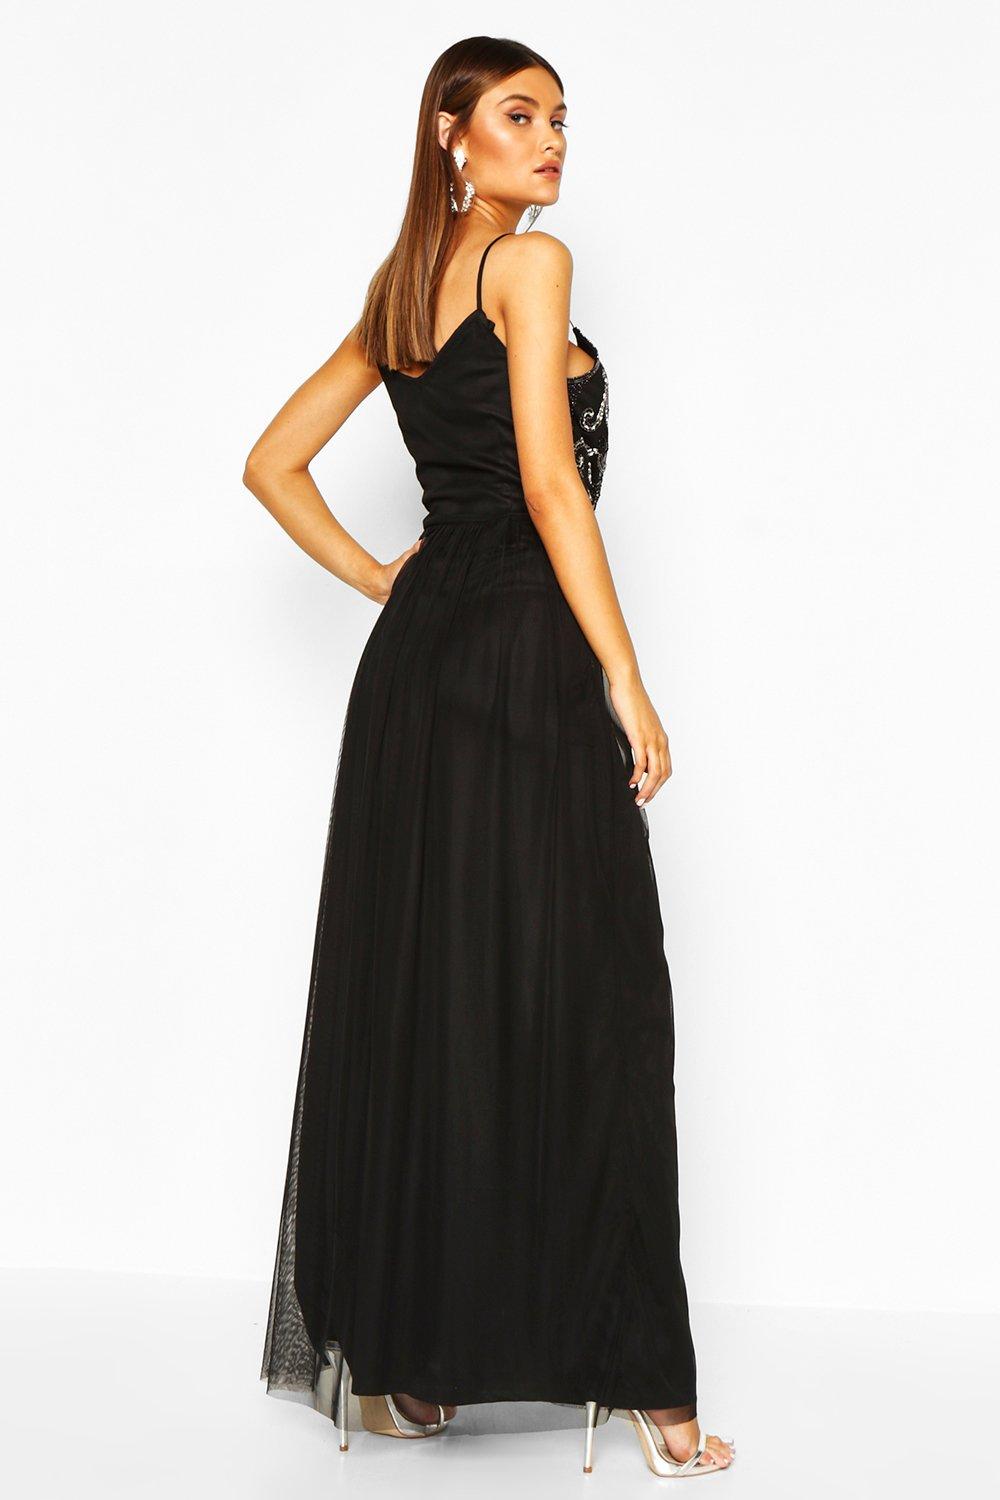 Boohoo Womens Lisa Boutique Embellished Prom Maxi Dress | eBay